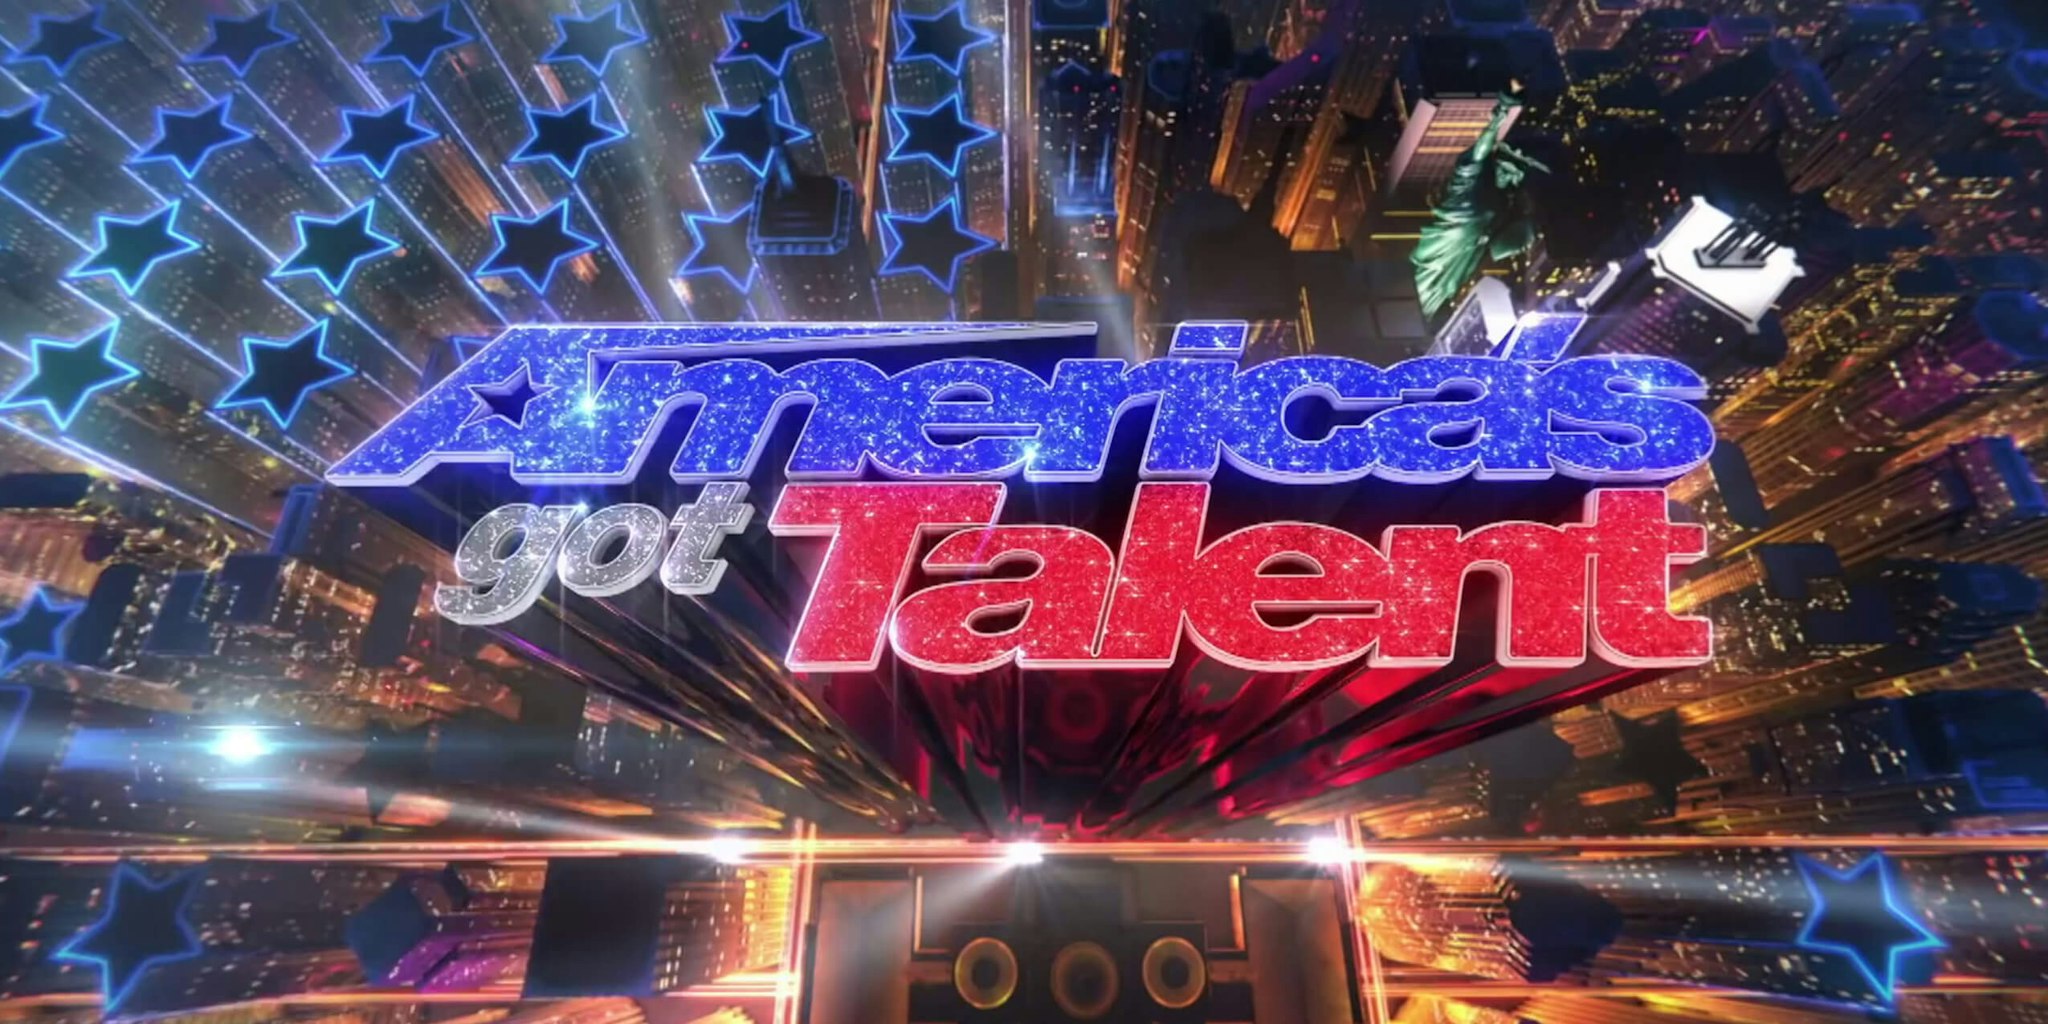 Stream 'America's Got Talent' How to Watch Online